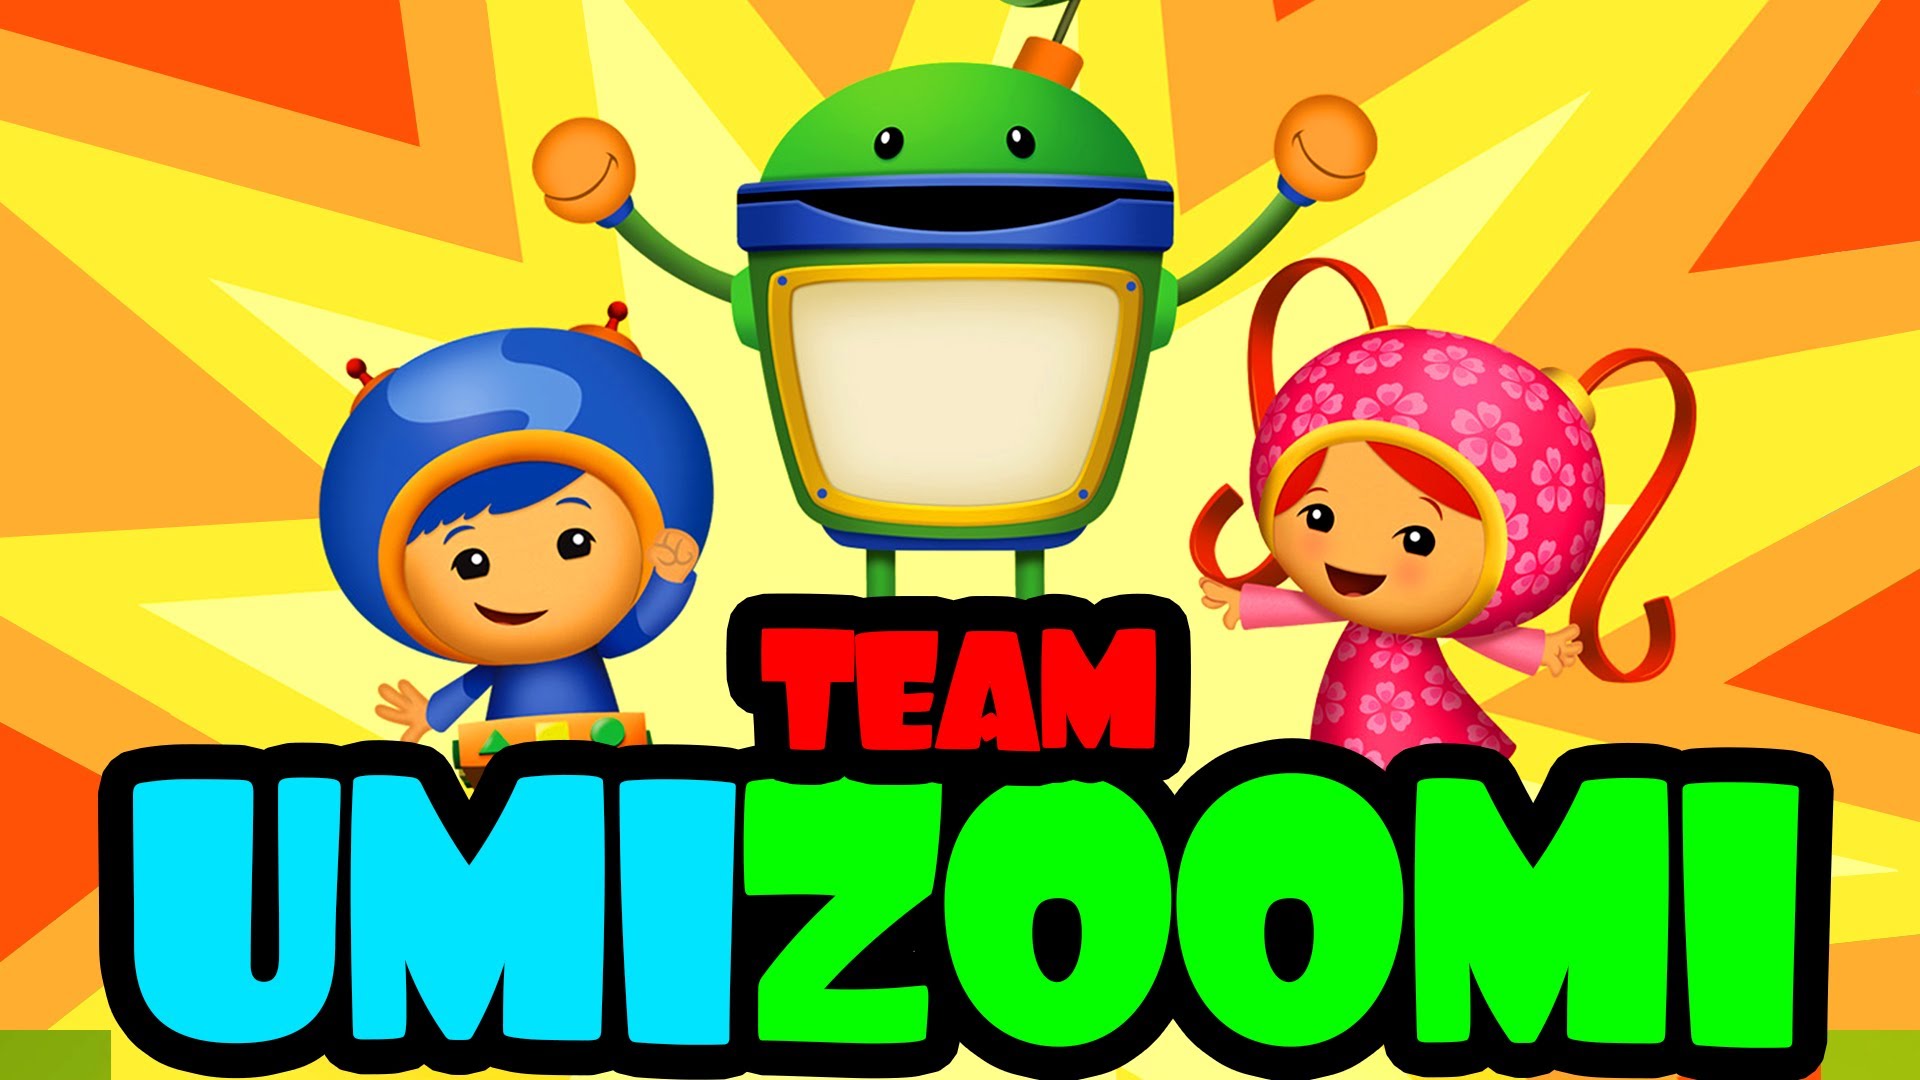 Team Umizoomi Cartoon Games Full Game Episodes for Children